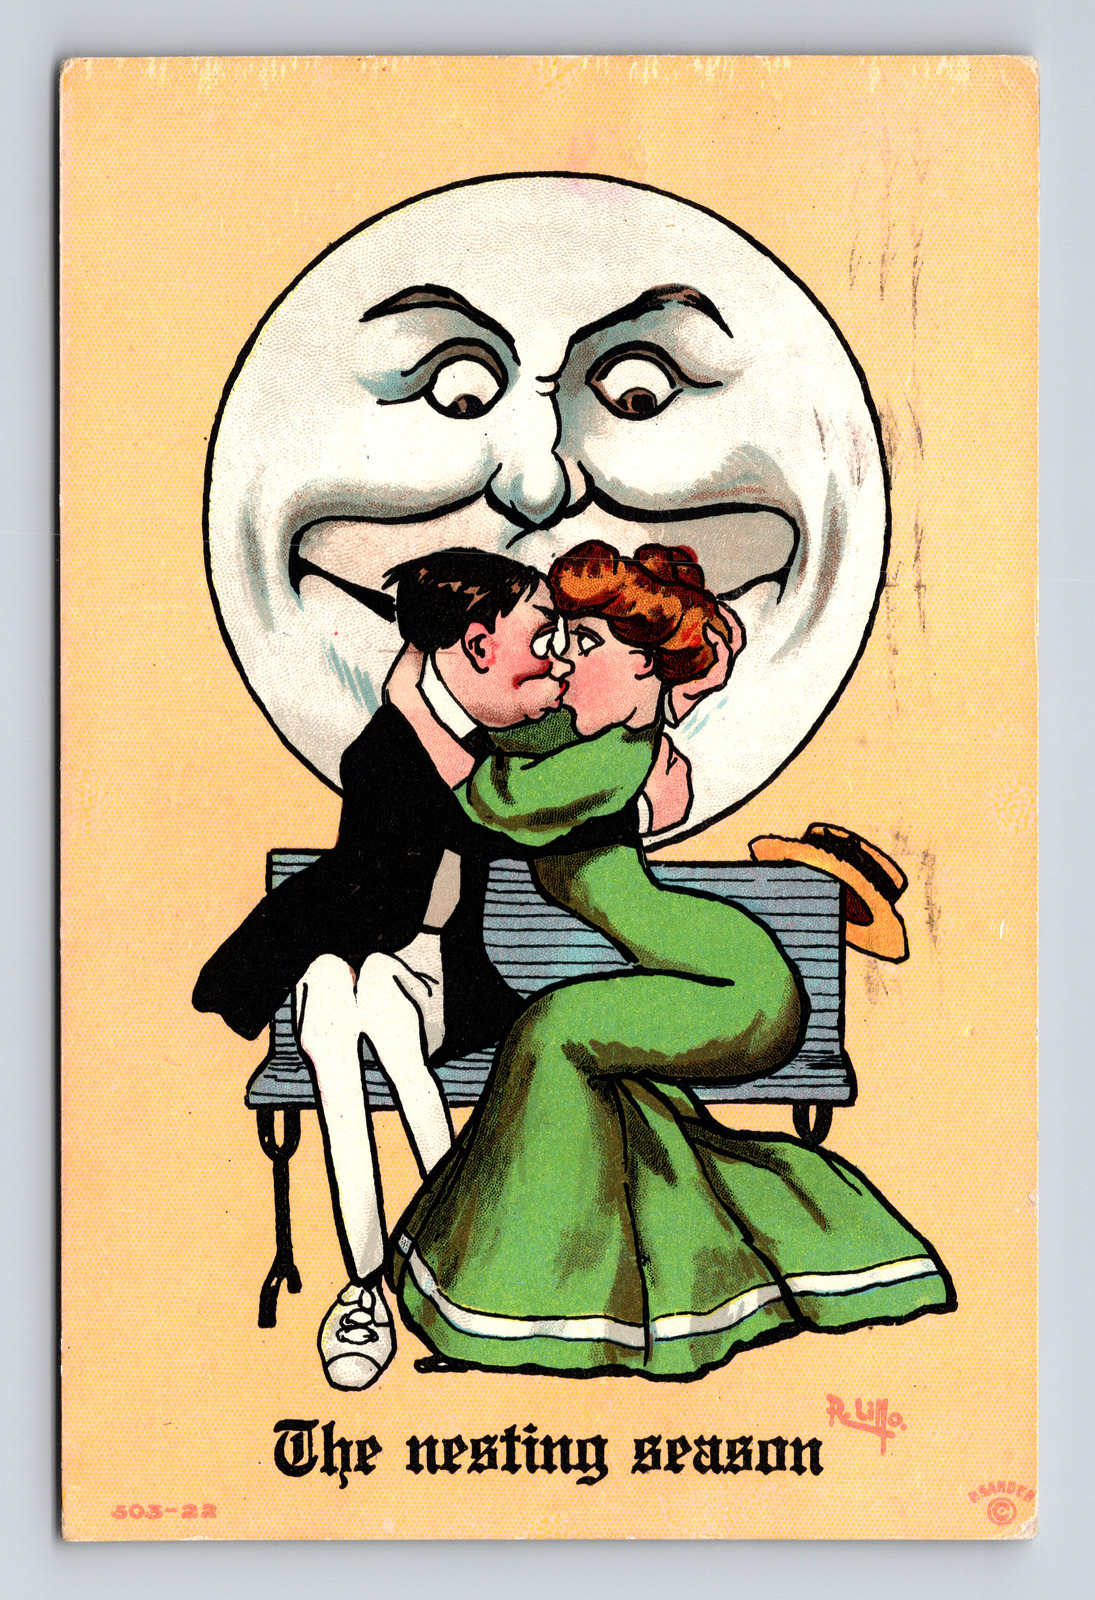 Artist R Lillo Nesting Season Moon Face Sexy Redhead Woman Kiss Curvy Postcard